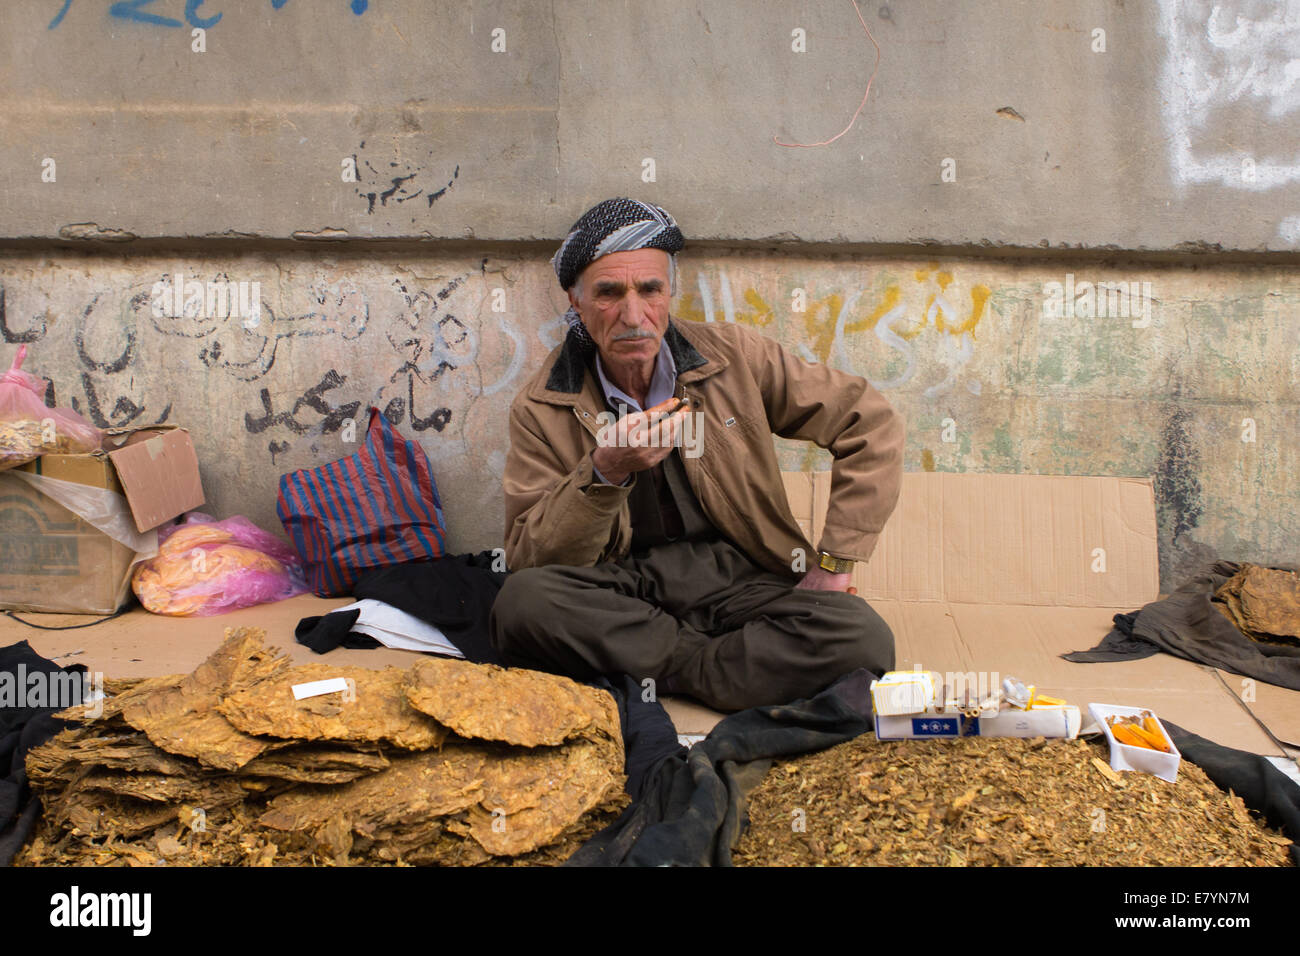 A Kurdish street vendor, wearing traditional clothing, selling tobacco in Erbil (Arbil), Iraqi Kurdistan province, Iraq. Stock Photo